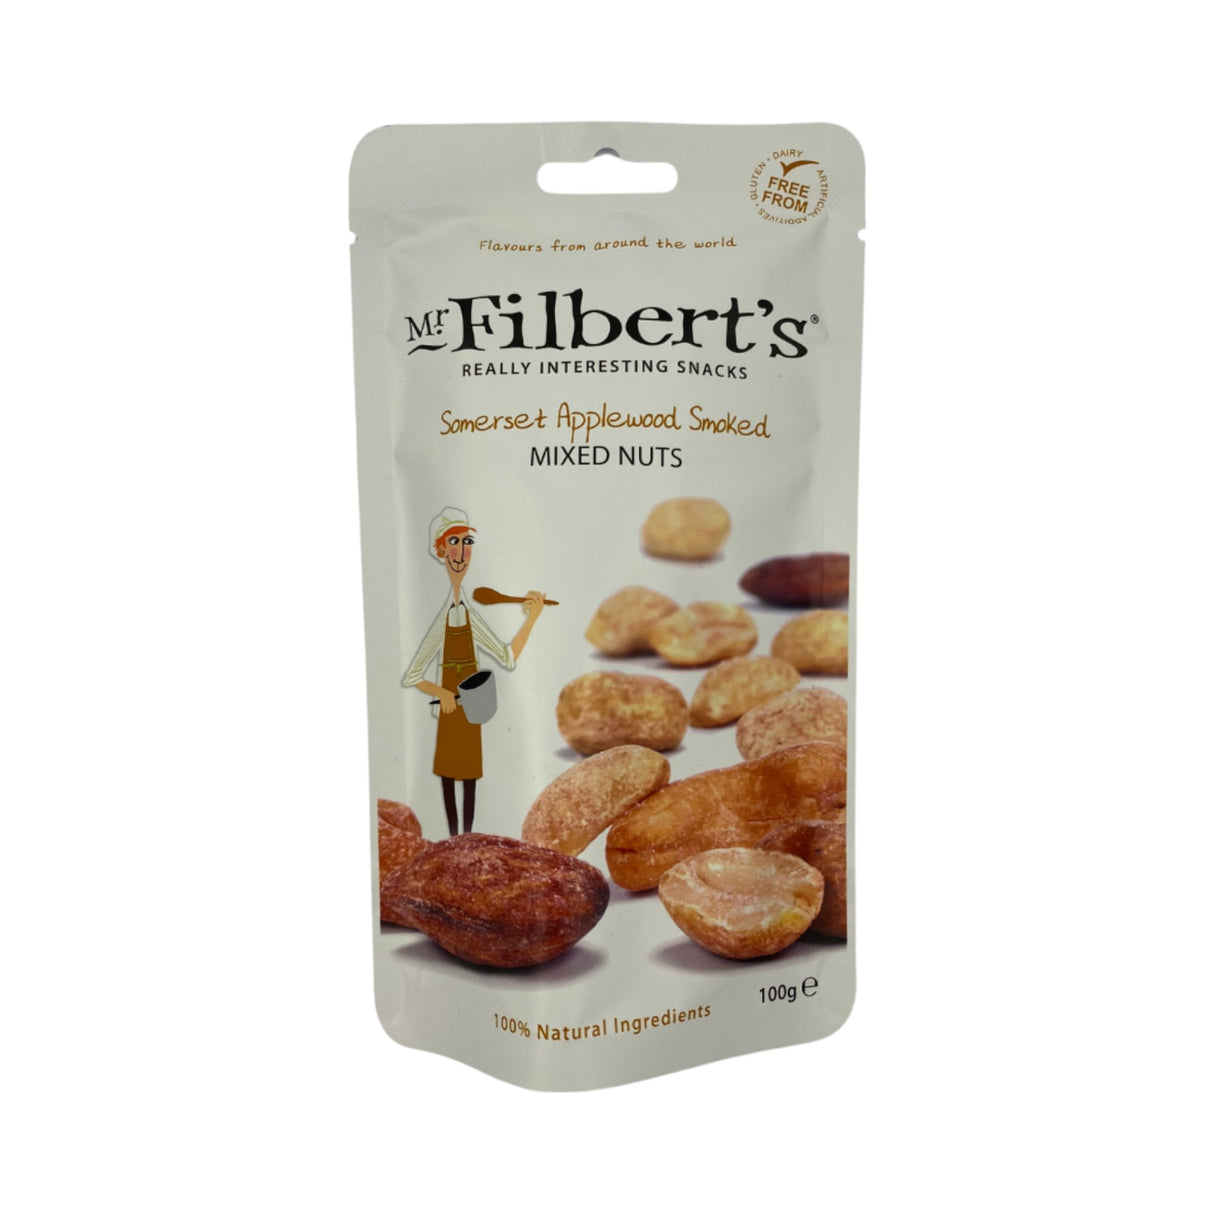 Mr Filberts - Somerset Applewood Smoked Mixed Nuts 100g